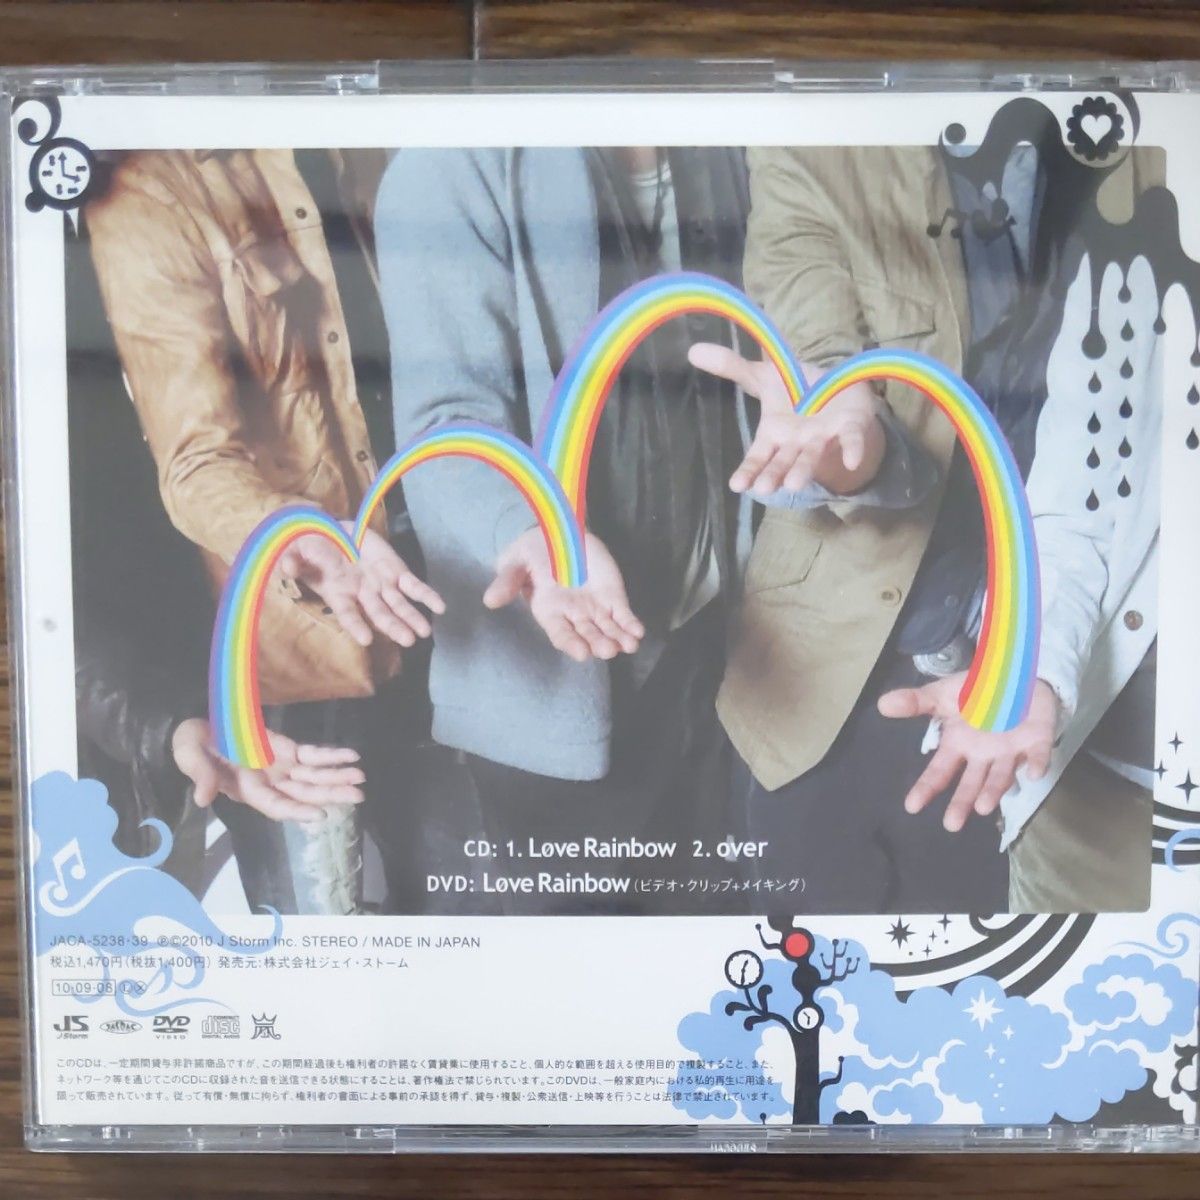 ARASHI Love Rainbow 初回限定盤　嵐